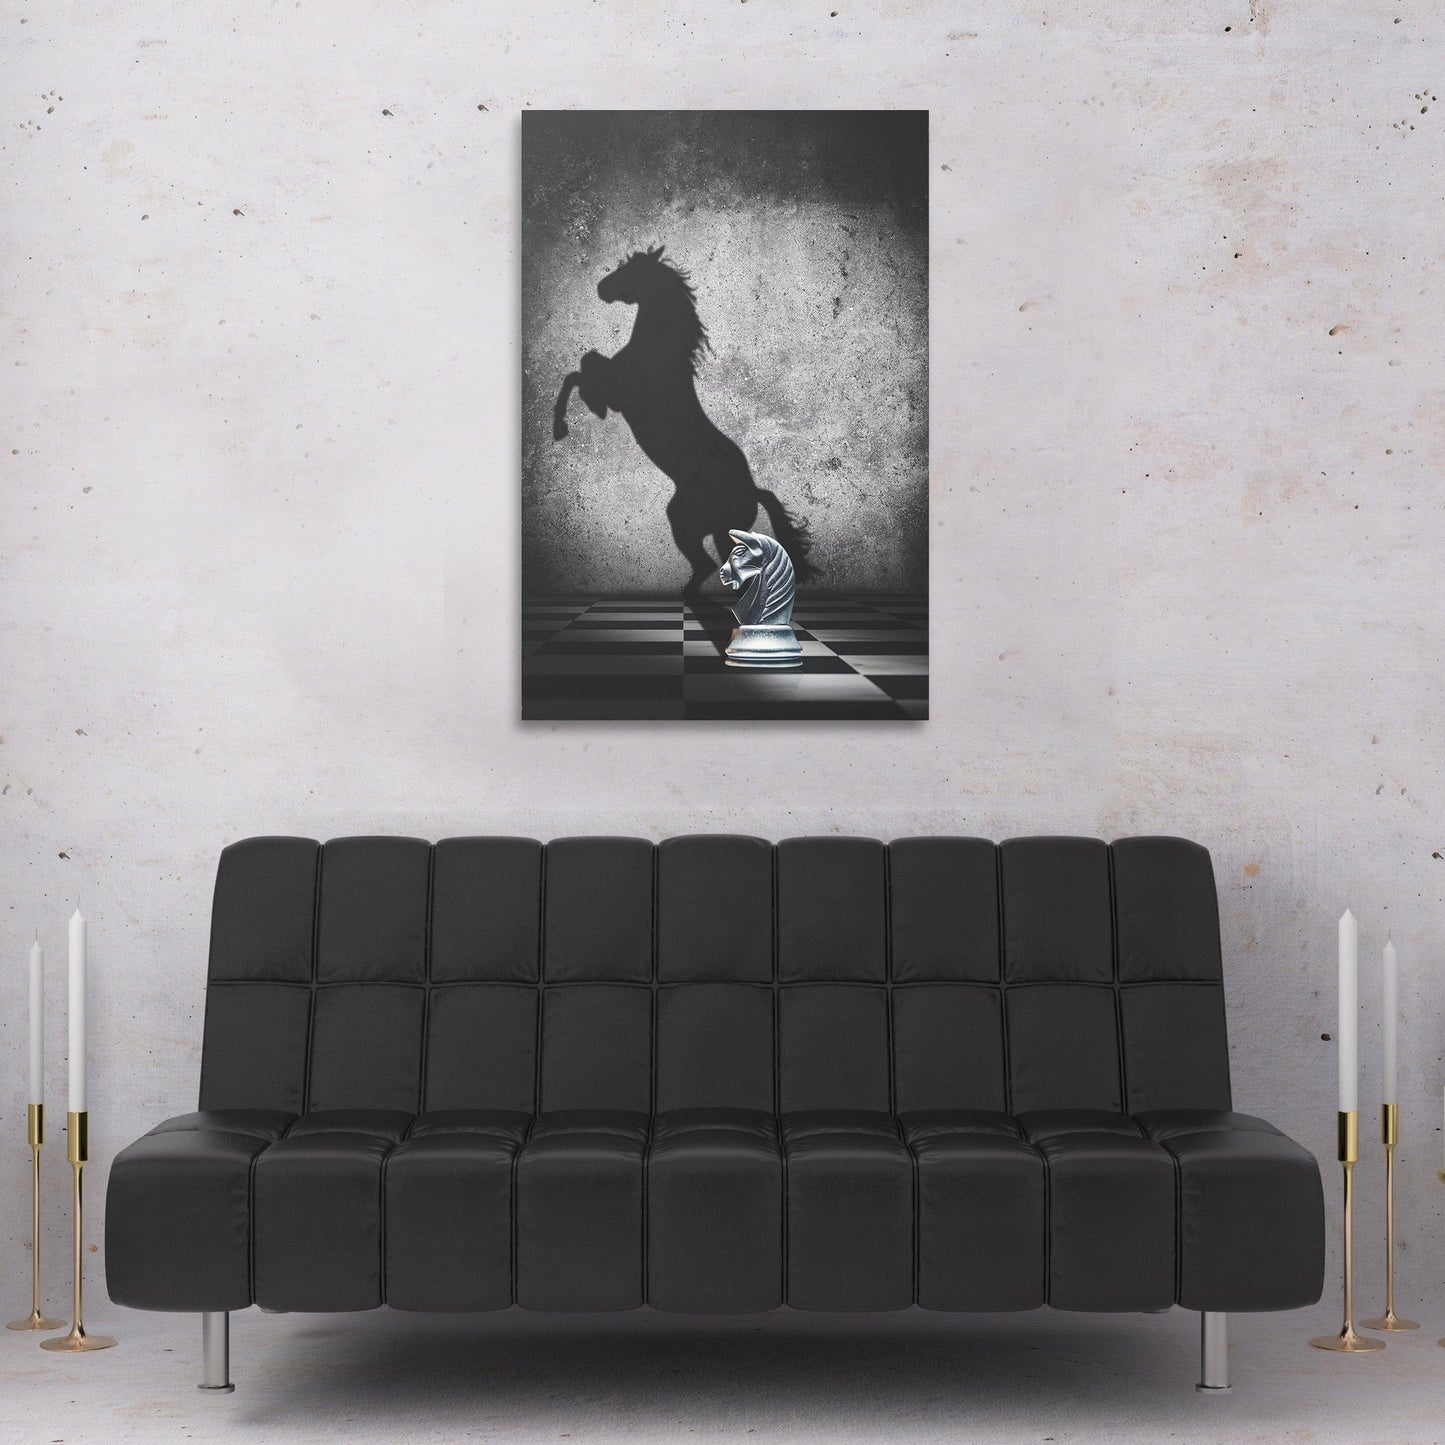 Believe you are - Neville Goddard Wall Art | Inspirational Wall Art Motivational Wall Art Quotes Office Art | ImpaktMaker Exclusive Canvas Art Portrait